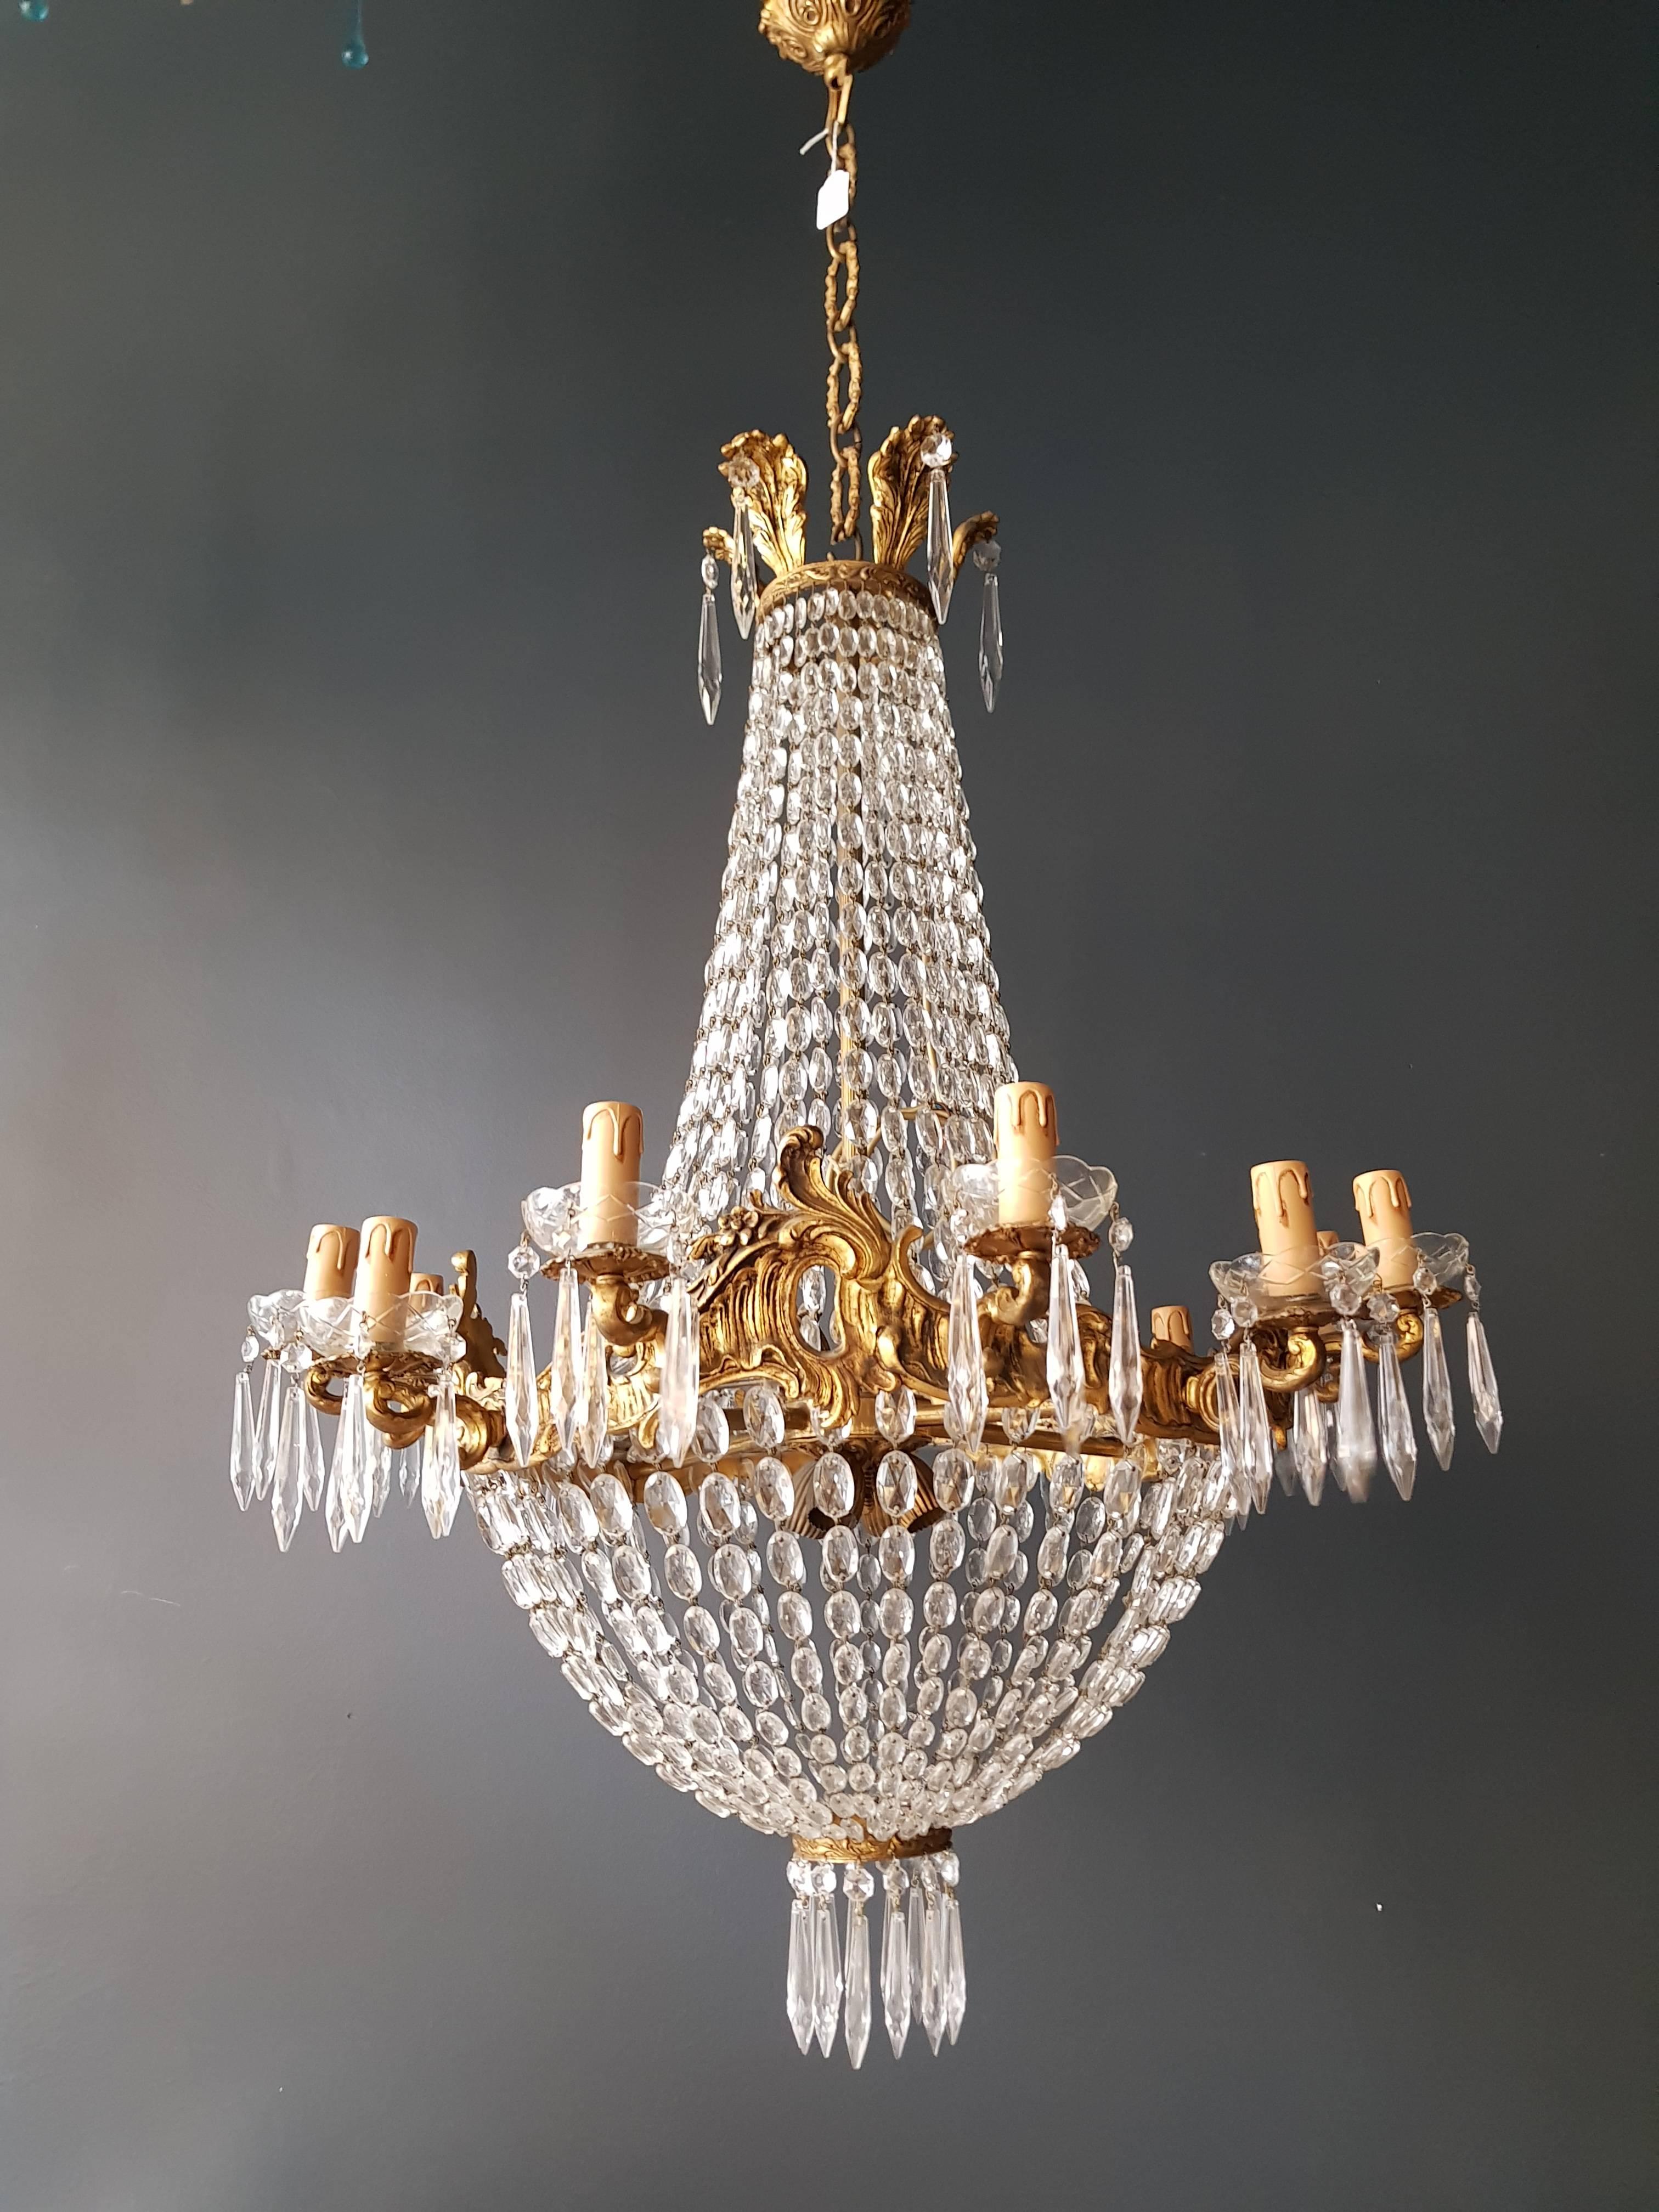 Montgolfière Empire Kronleuchter Crystal Sac a Pearl Lampe Lustre Korb 2